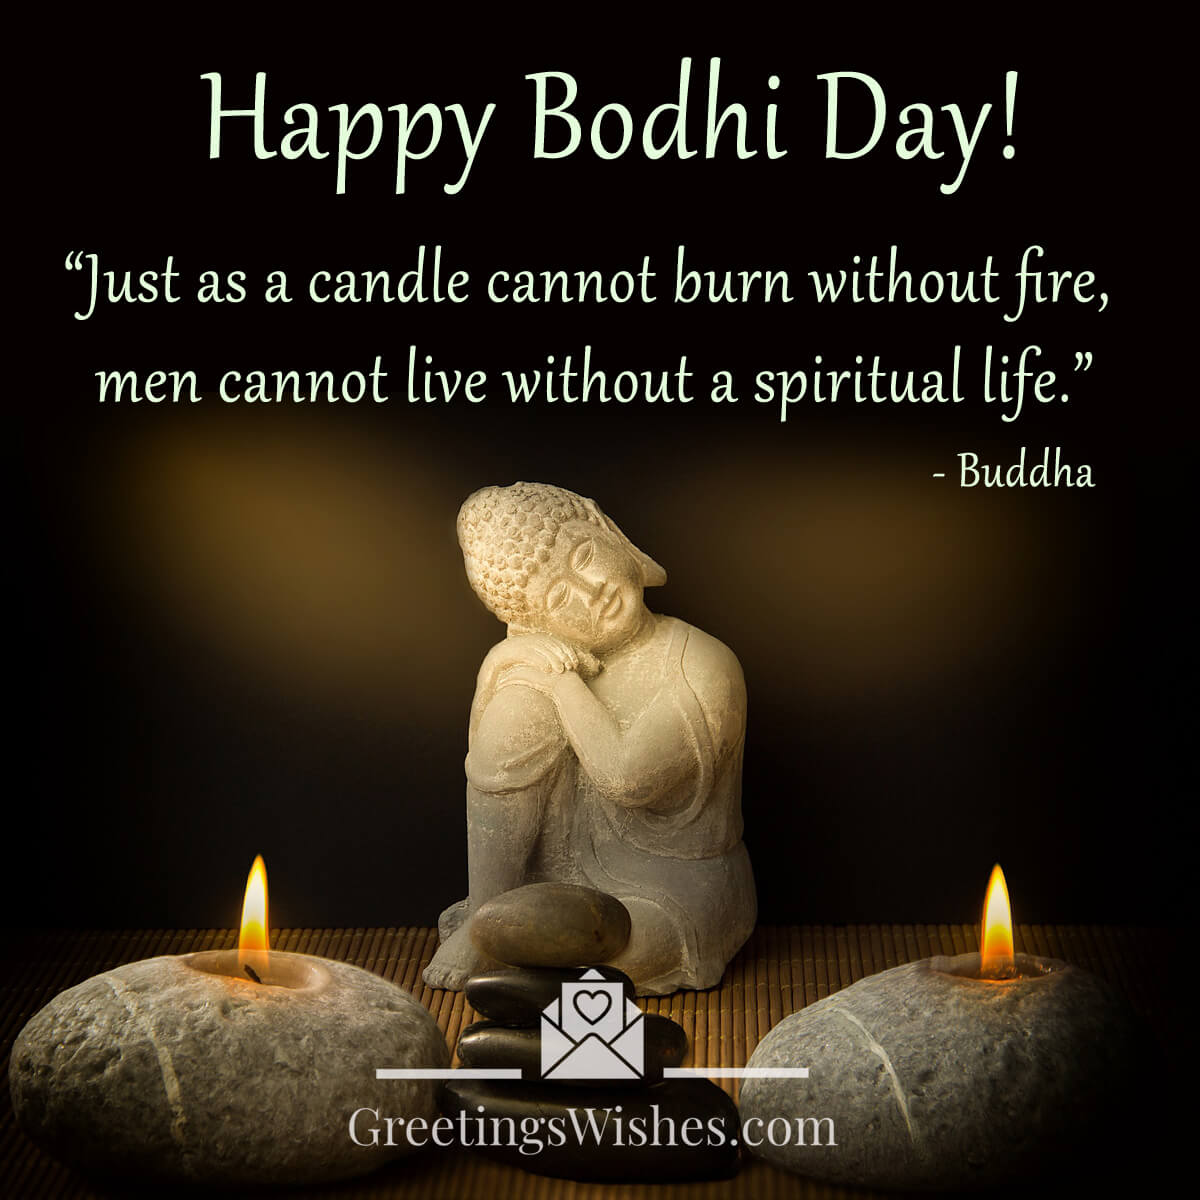 Happy Bodhi Day